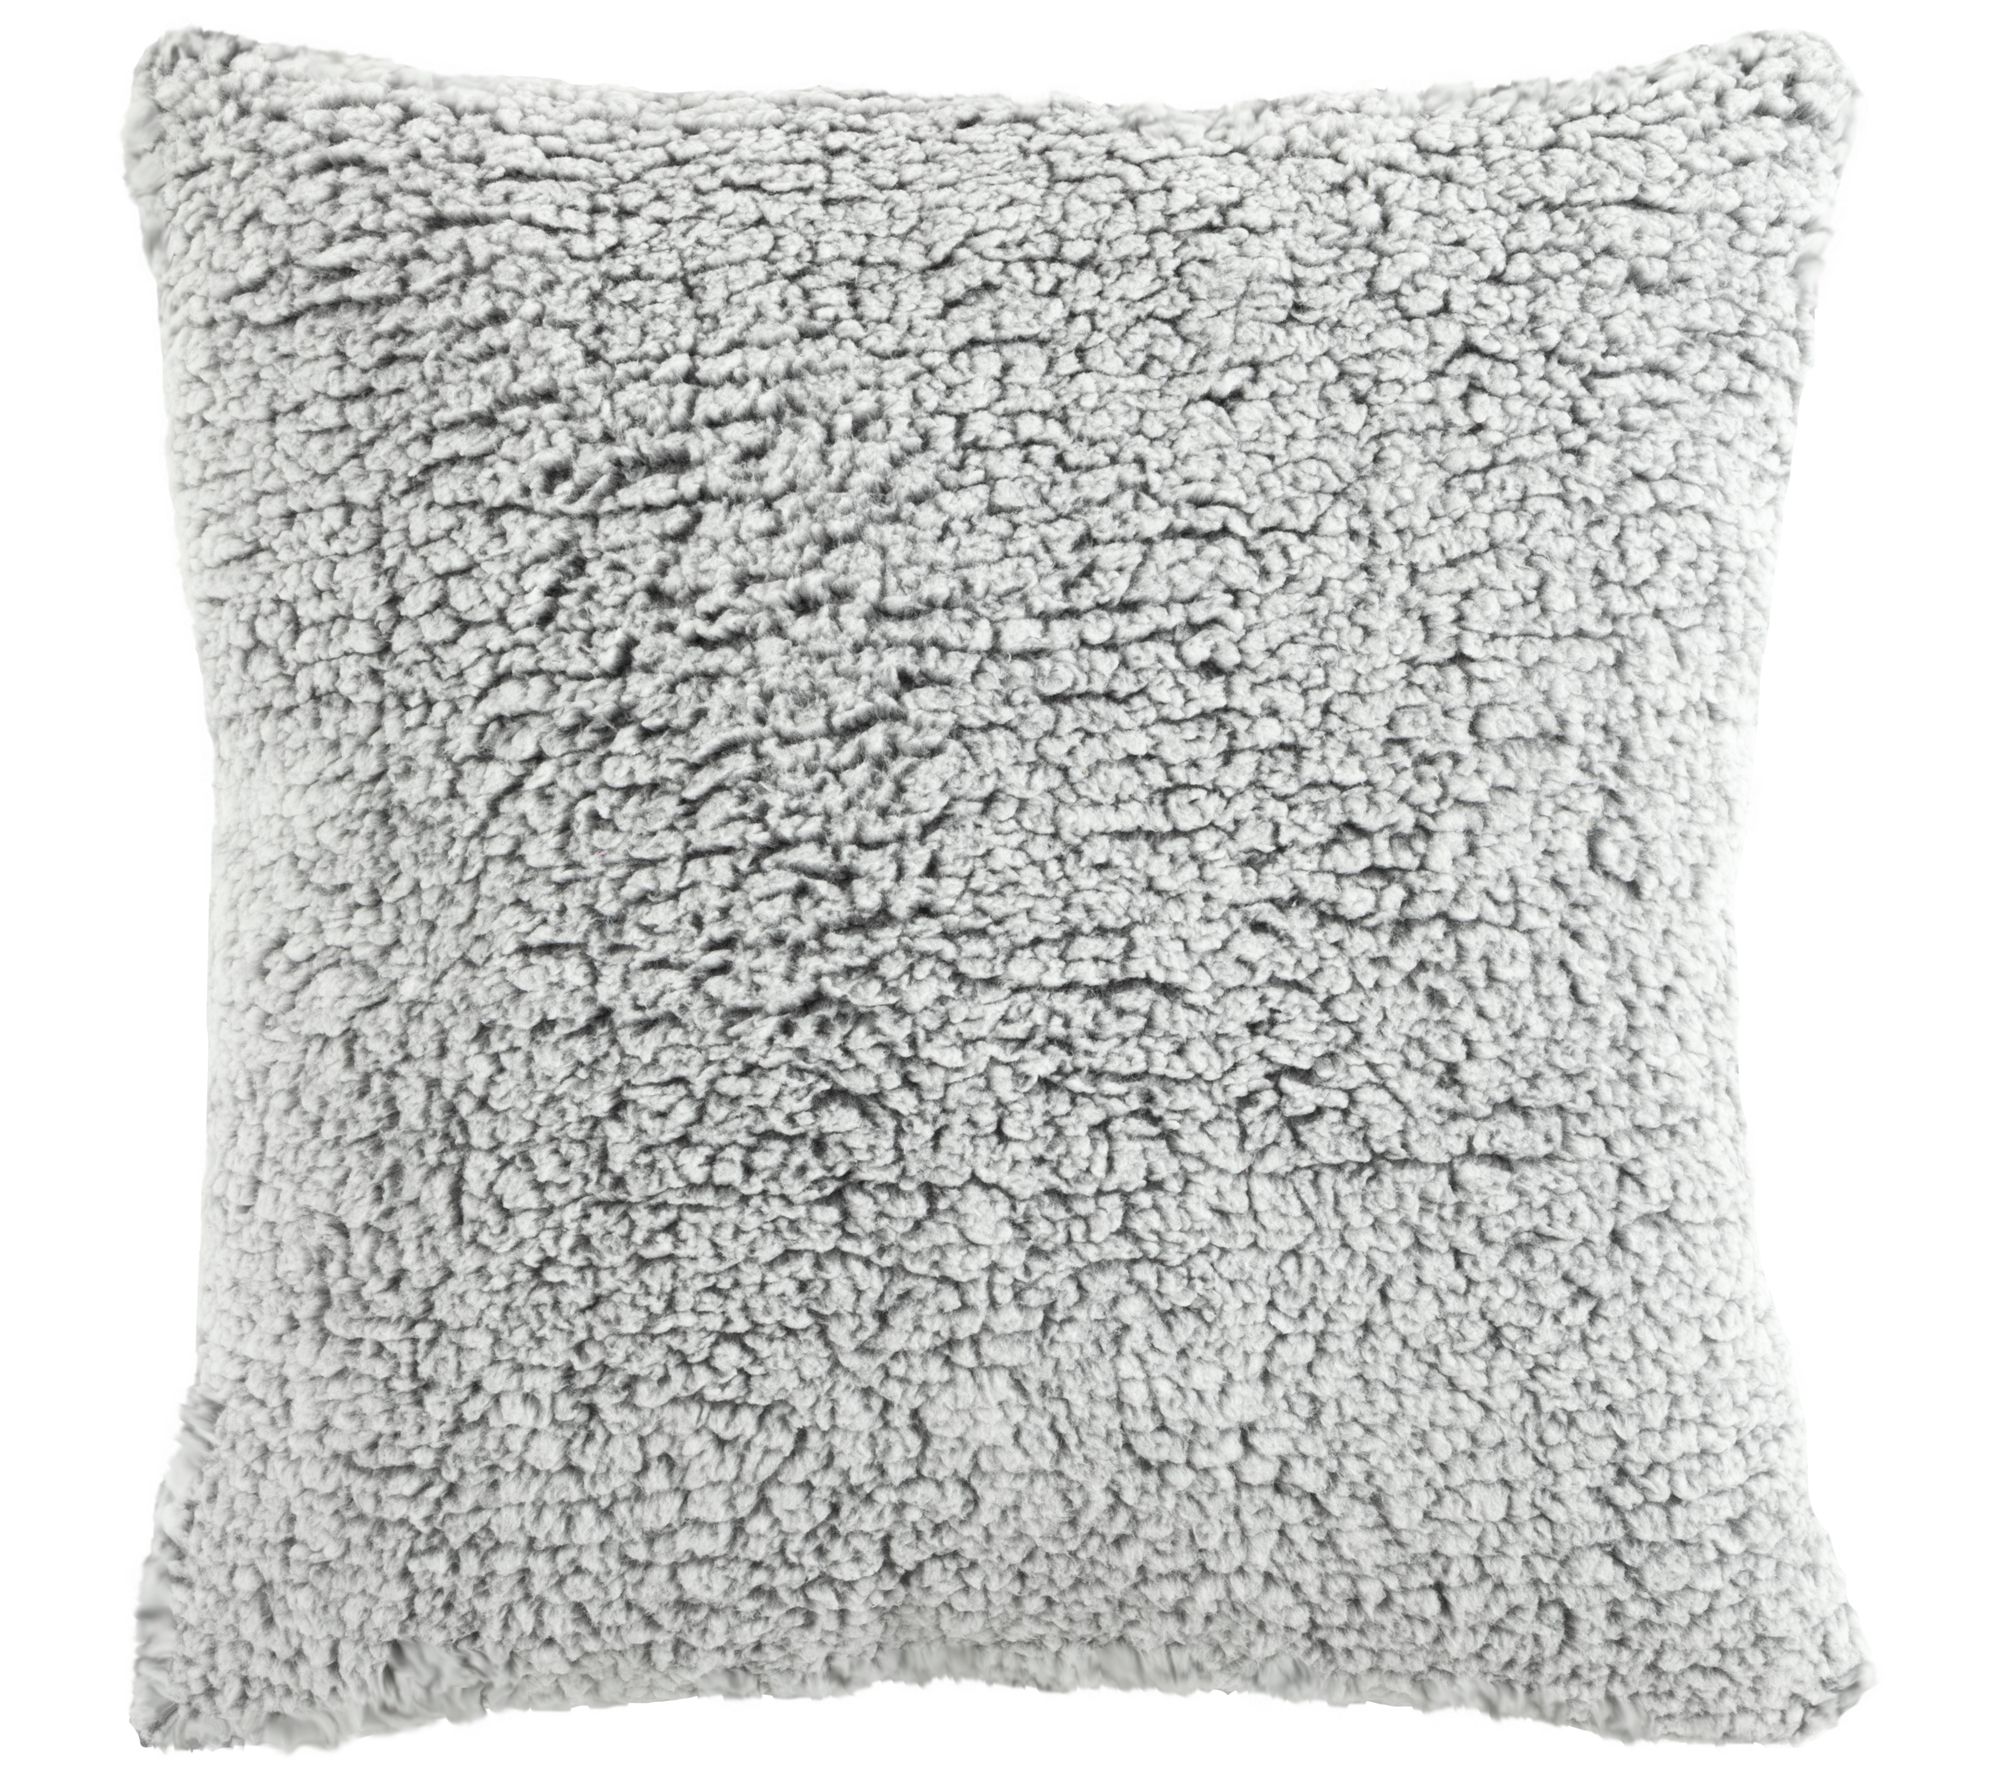 Lush Decor Emma Faux Fur Decorative Pillow Cover White Single 20x20